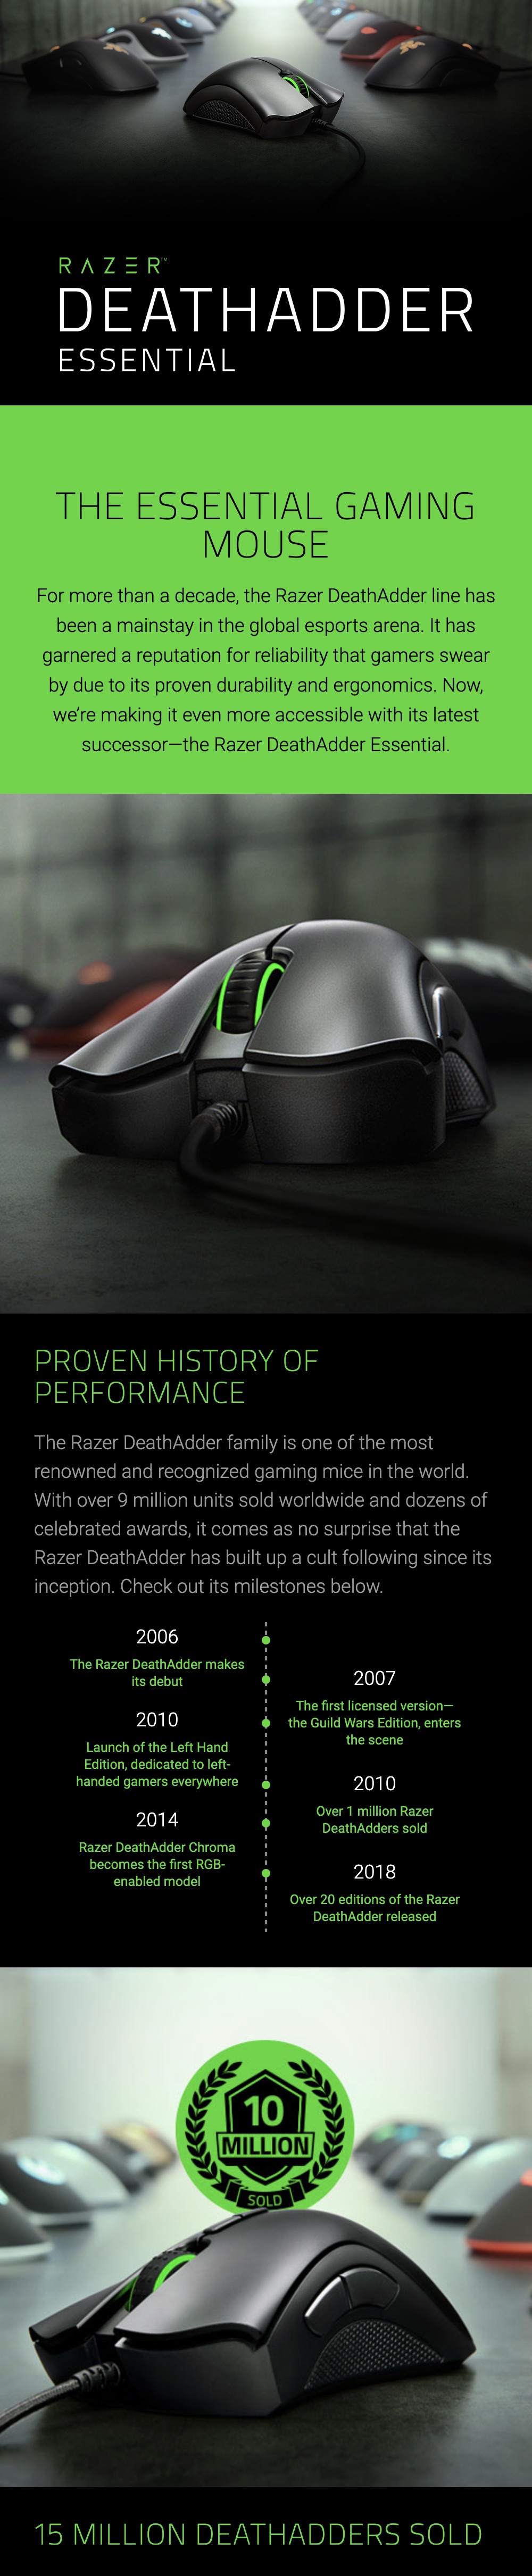 Razer-DeathAdder-Essential-Wired-Gaming-Mouse-Description-1